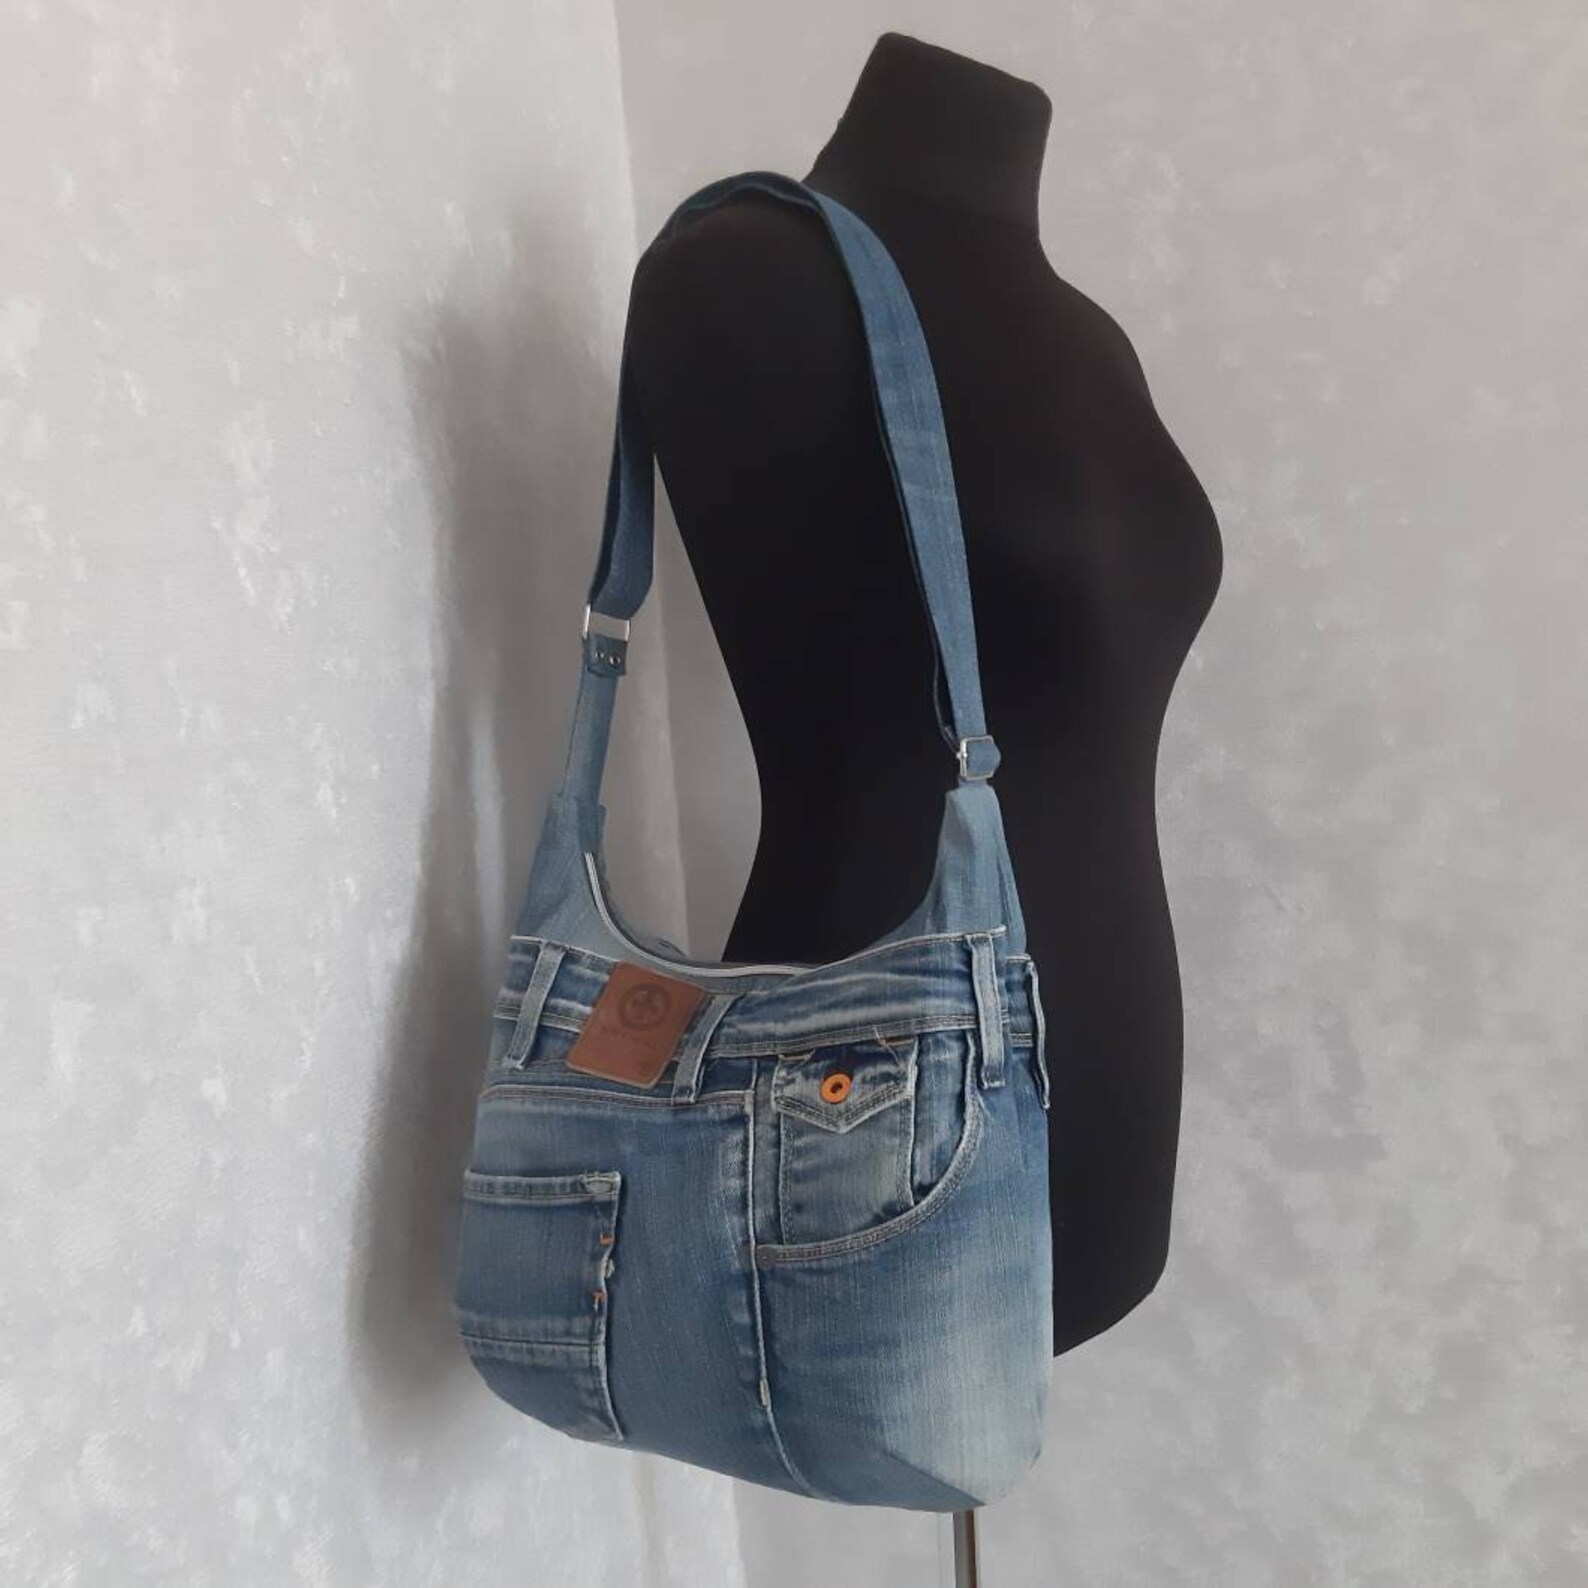 Shoulder Denim Bag Medium Size Jean Crossbody Purse Casual - Etsy